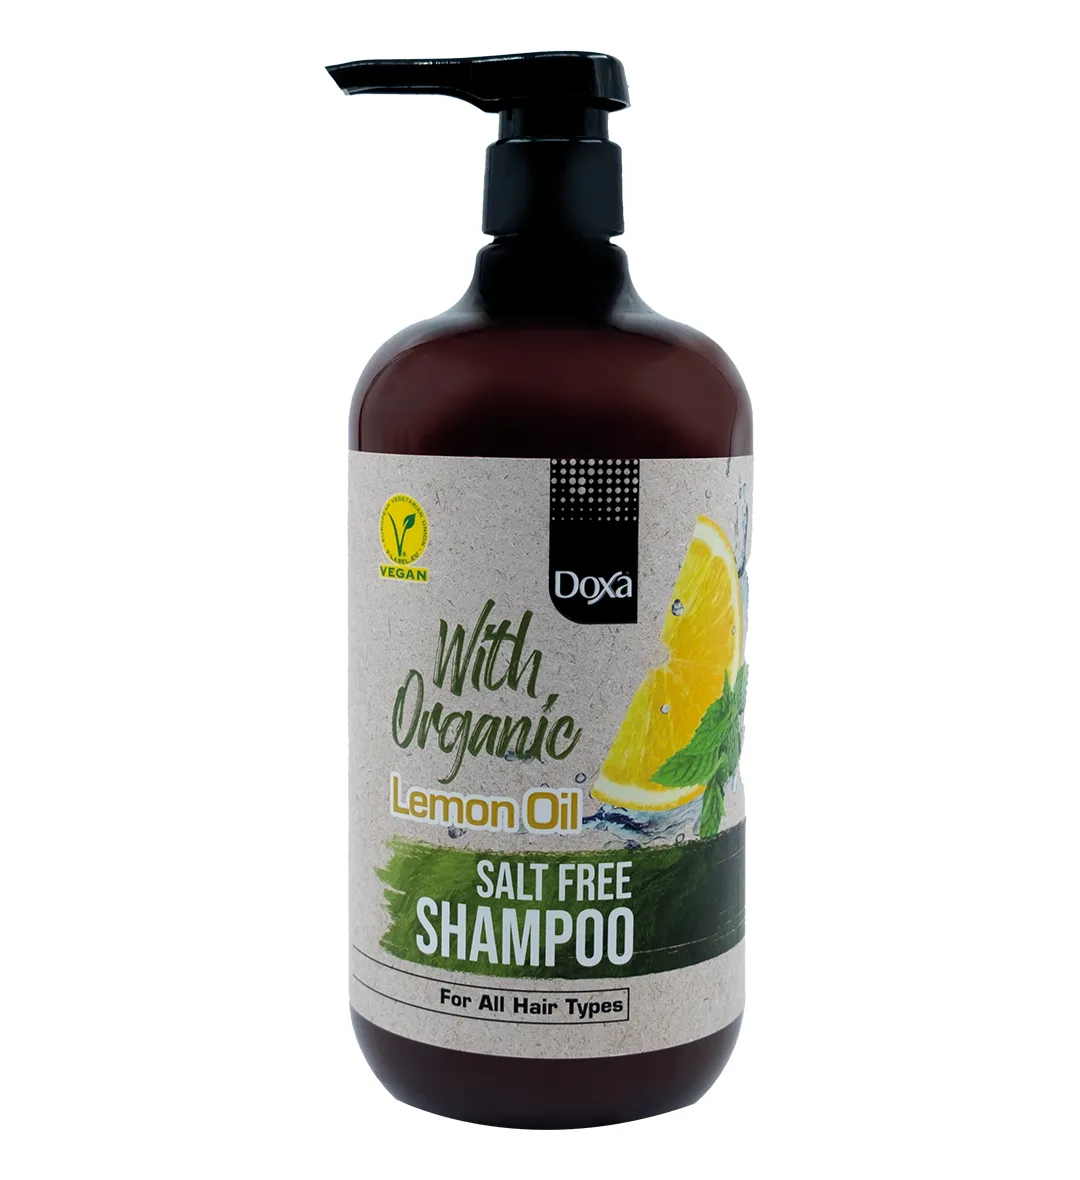 Doxa 500 Ml Salt Free Shampoo With Organic Lemon Oil - For All Hair Types